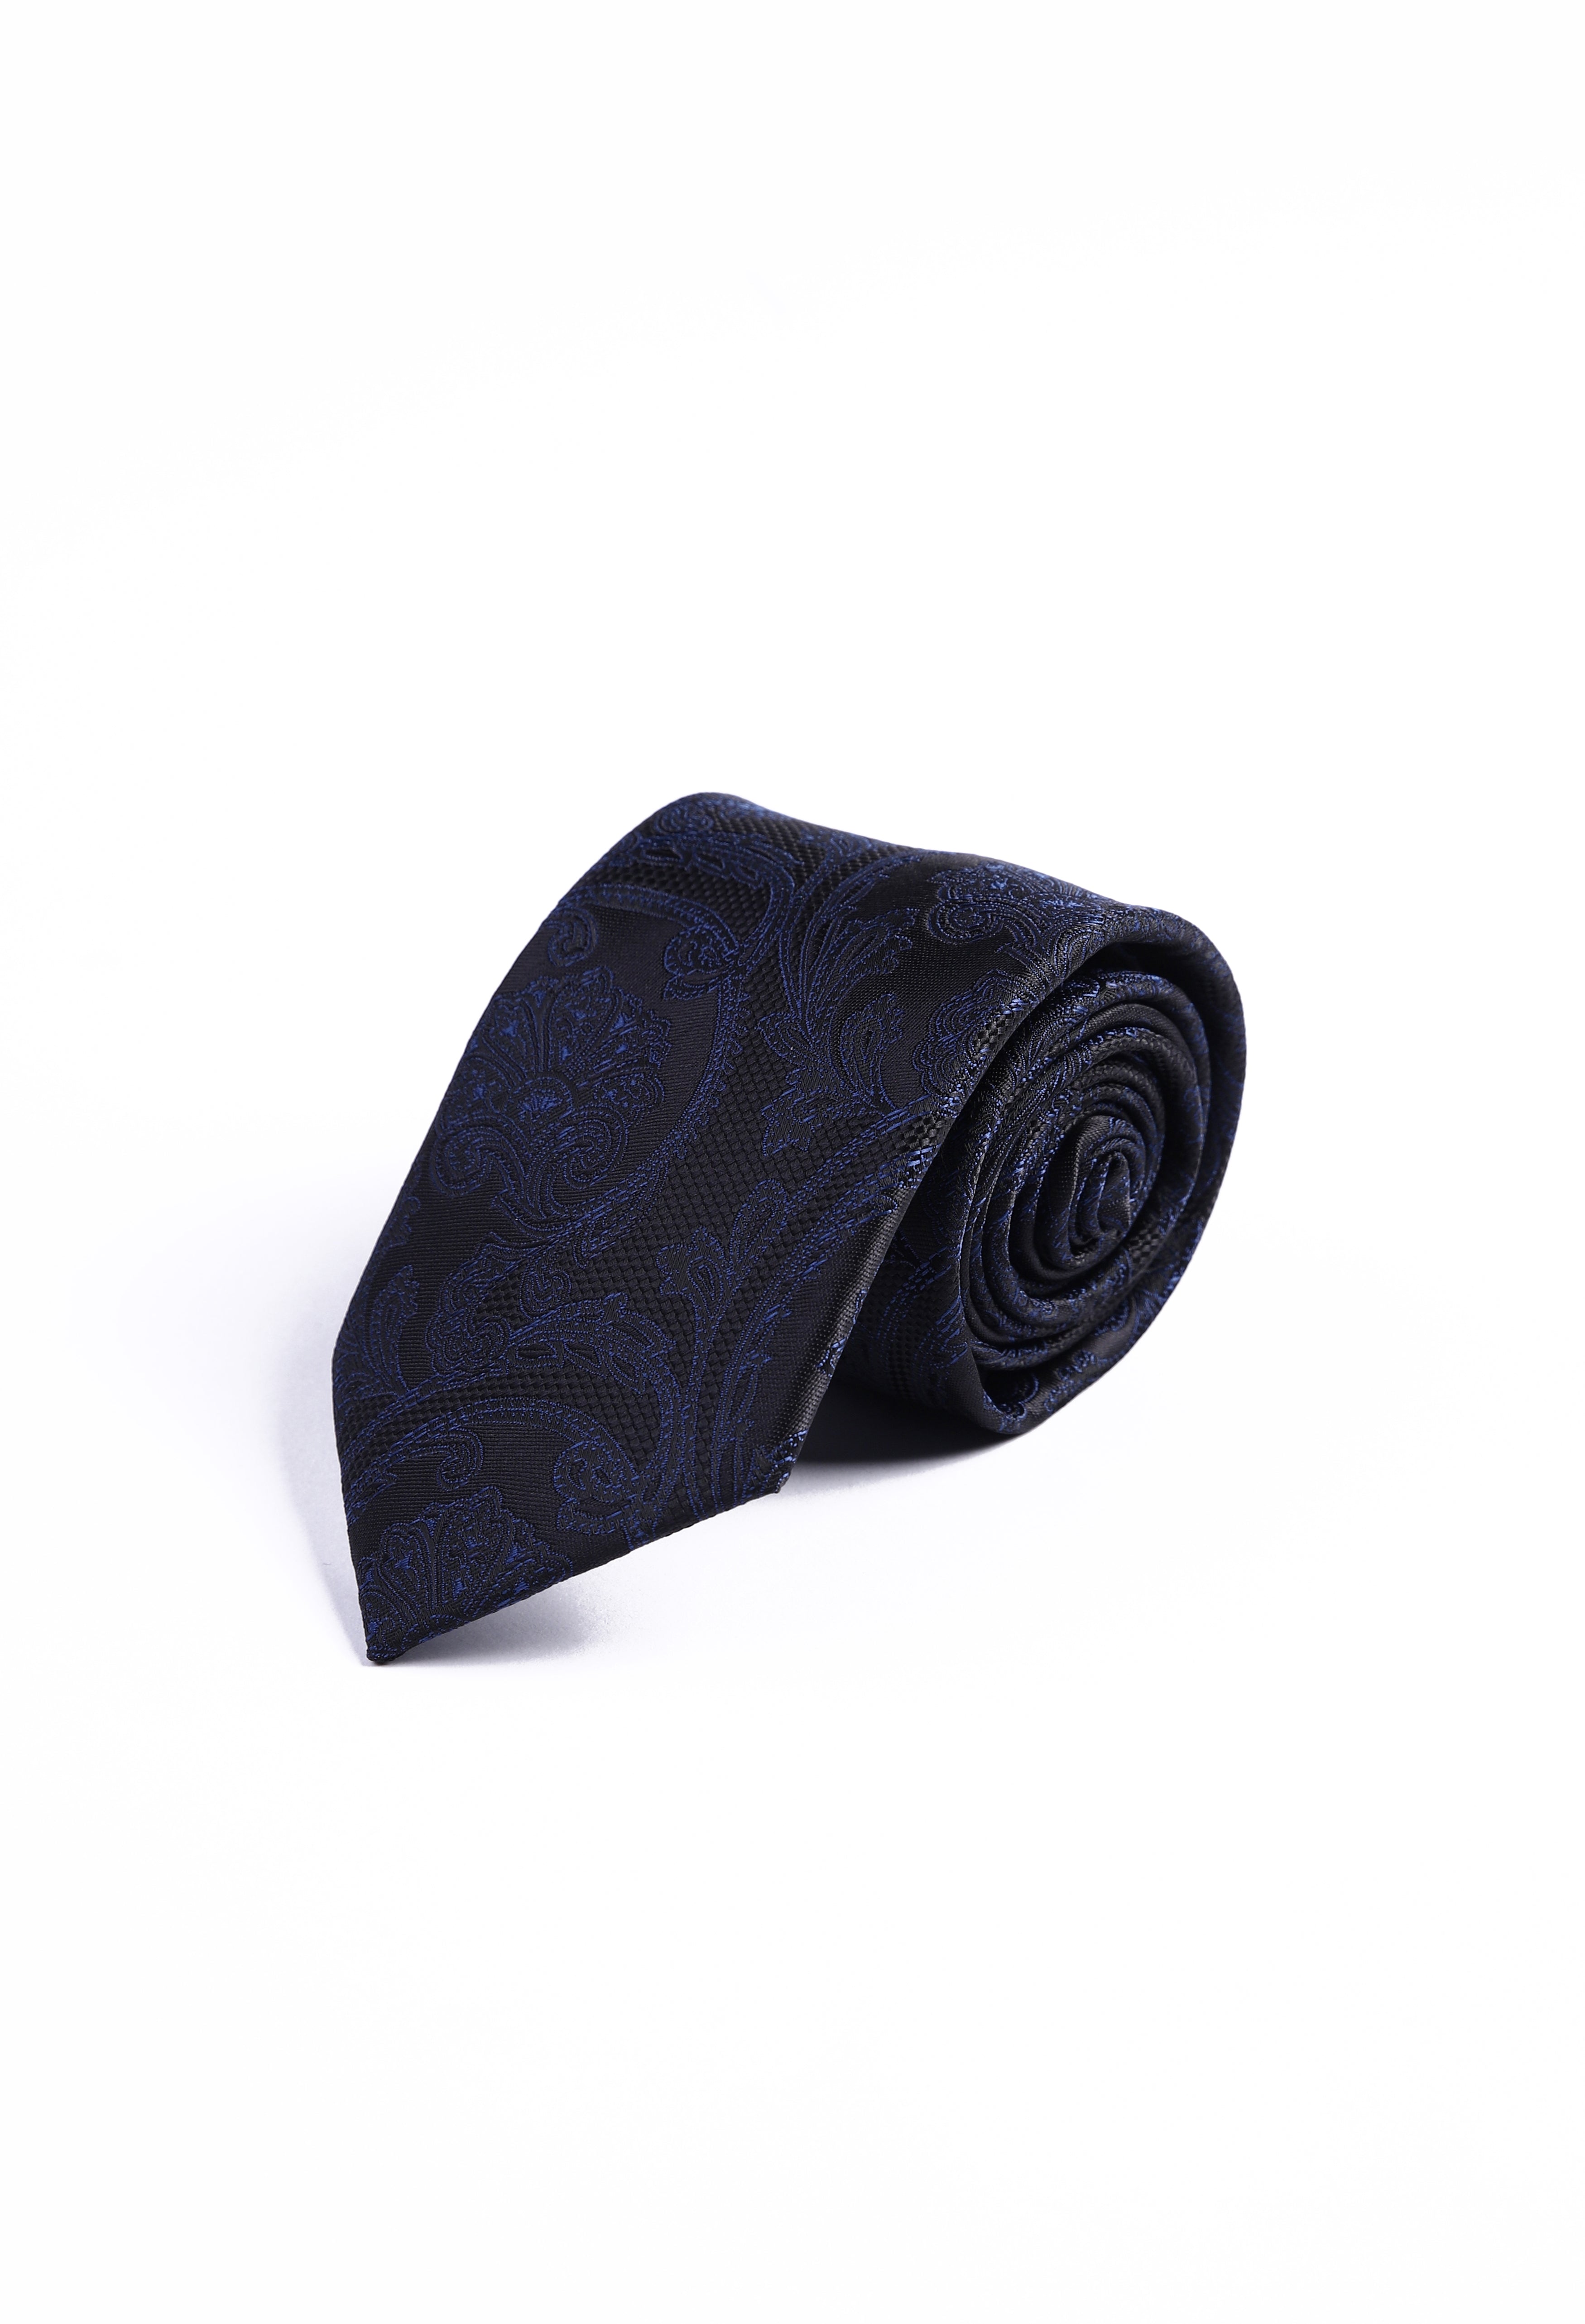 Oxford Blue Paisley Tie (TIE-000023)